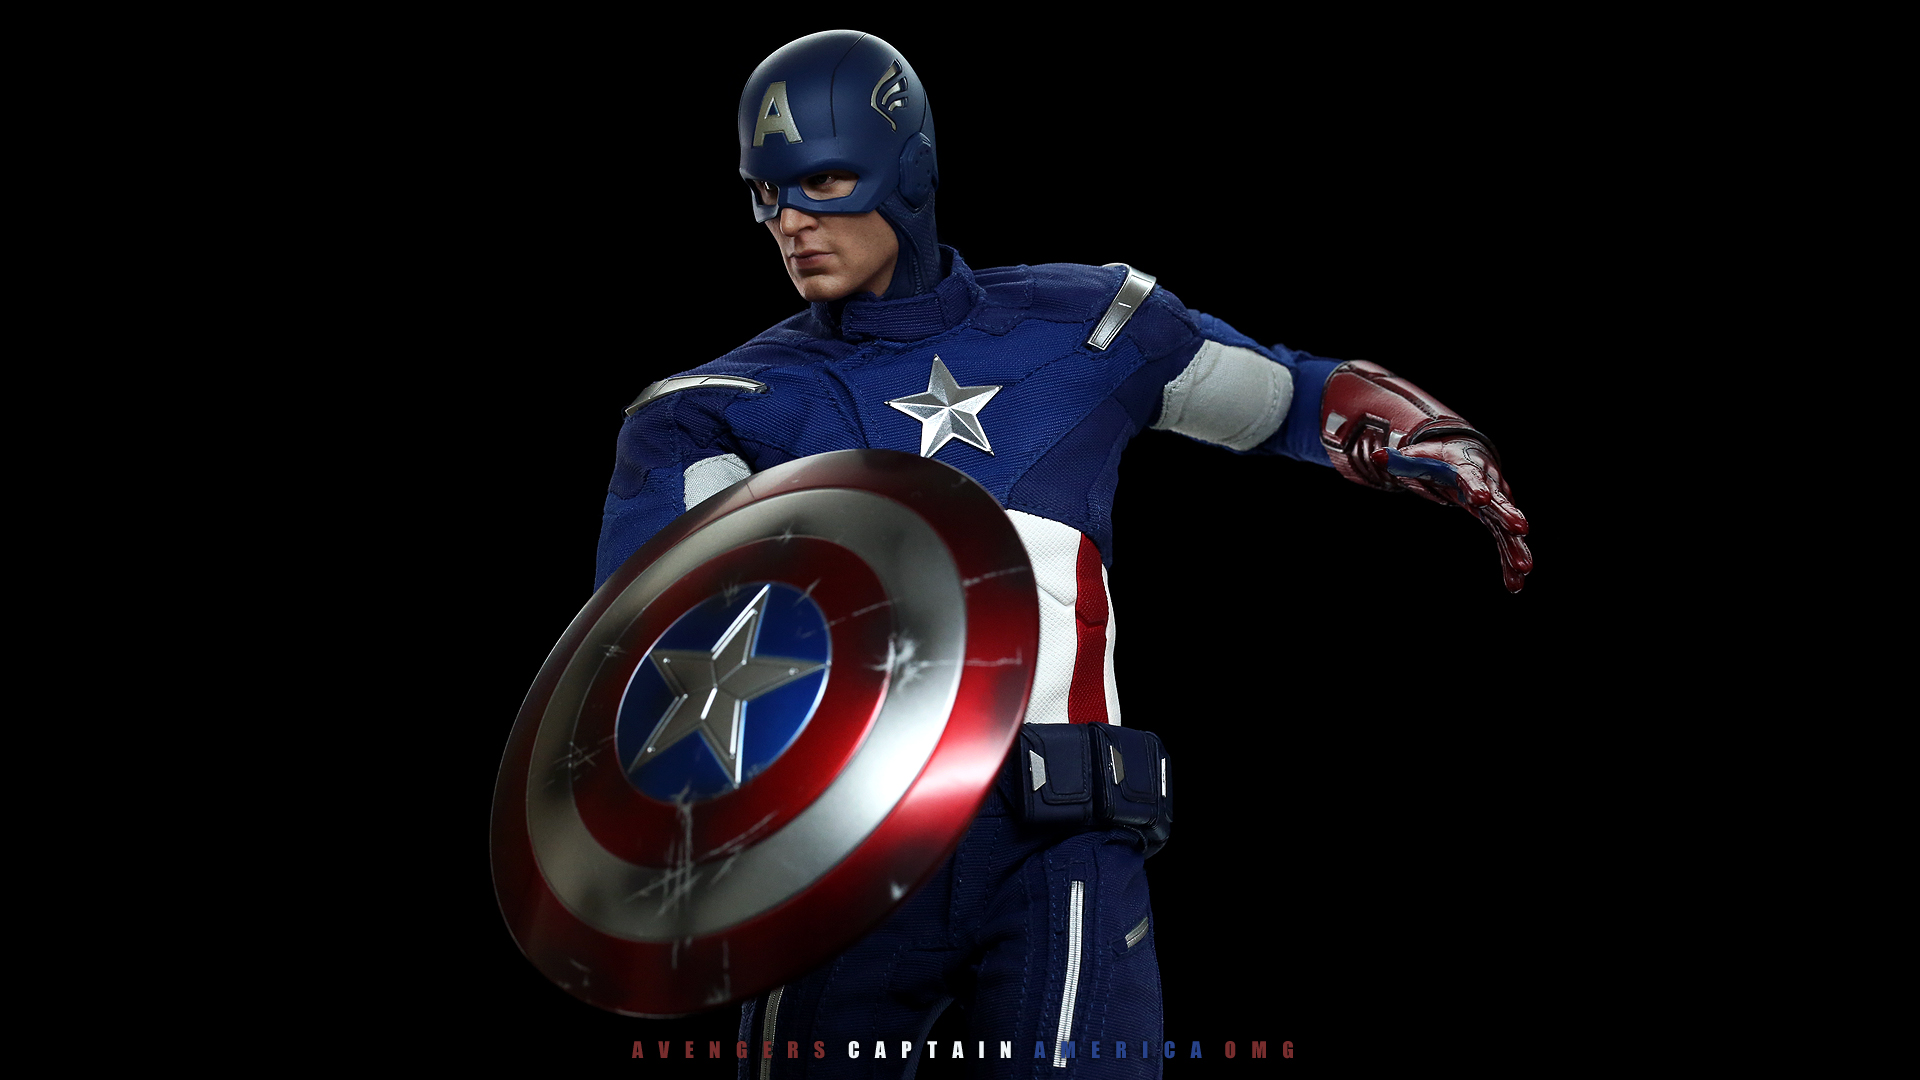 Download Captain America Avengers 2 HD Desktop Wallpapers We provide 1920x1080